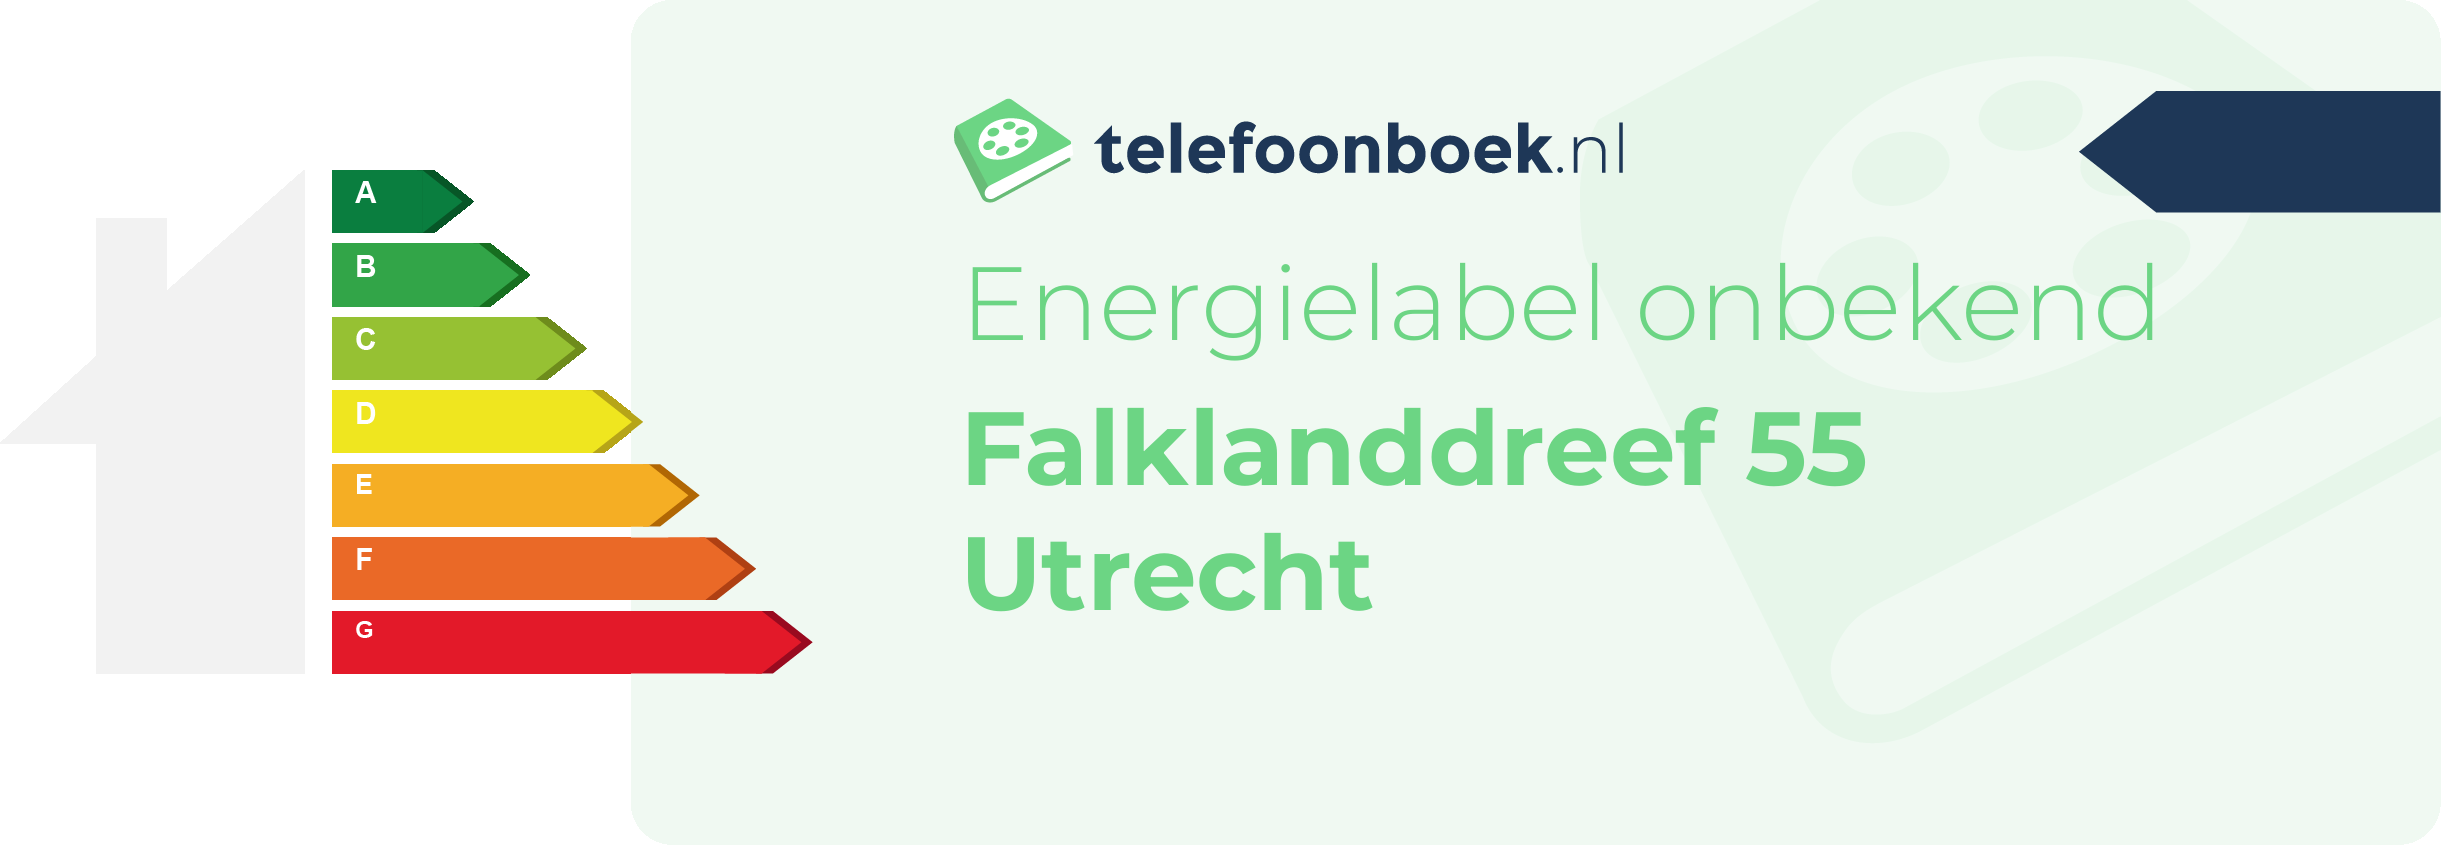 Energielabel Falklanddreef 55 Utrecht